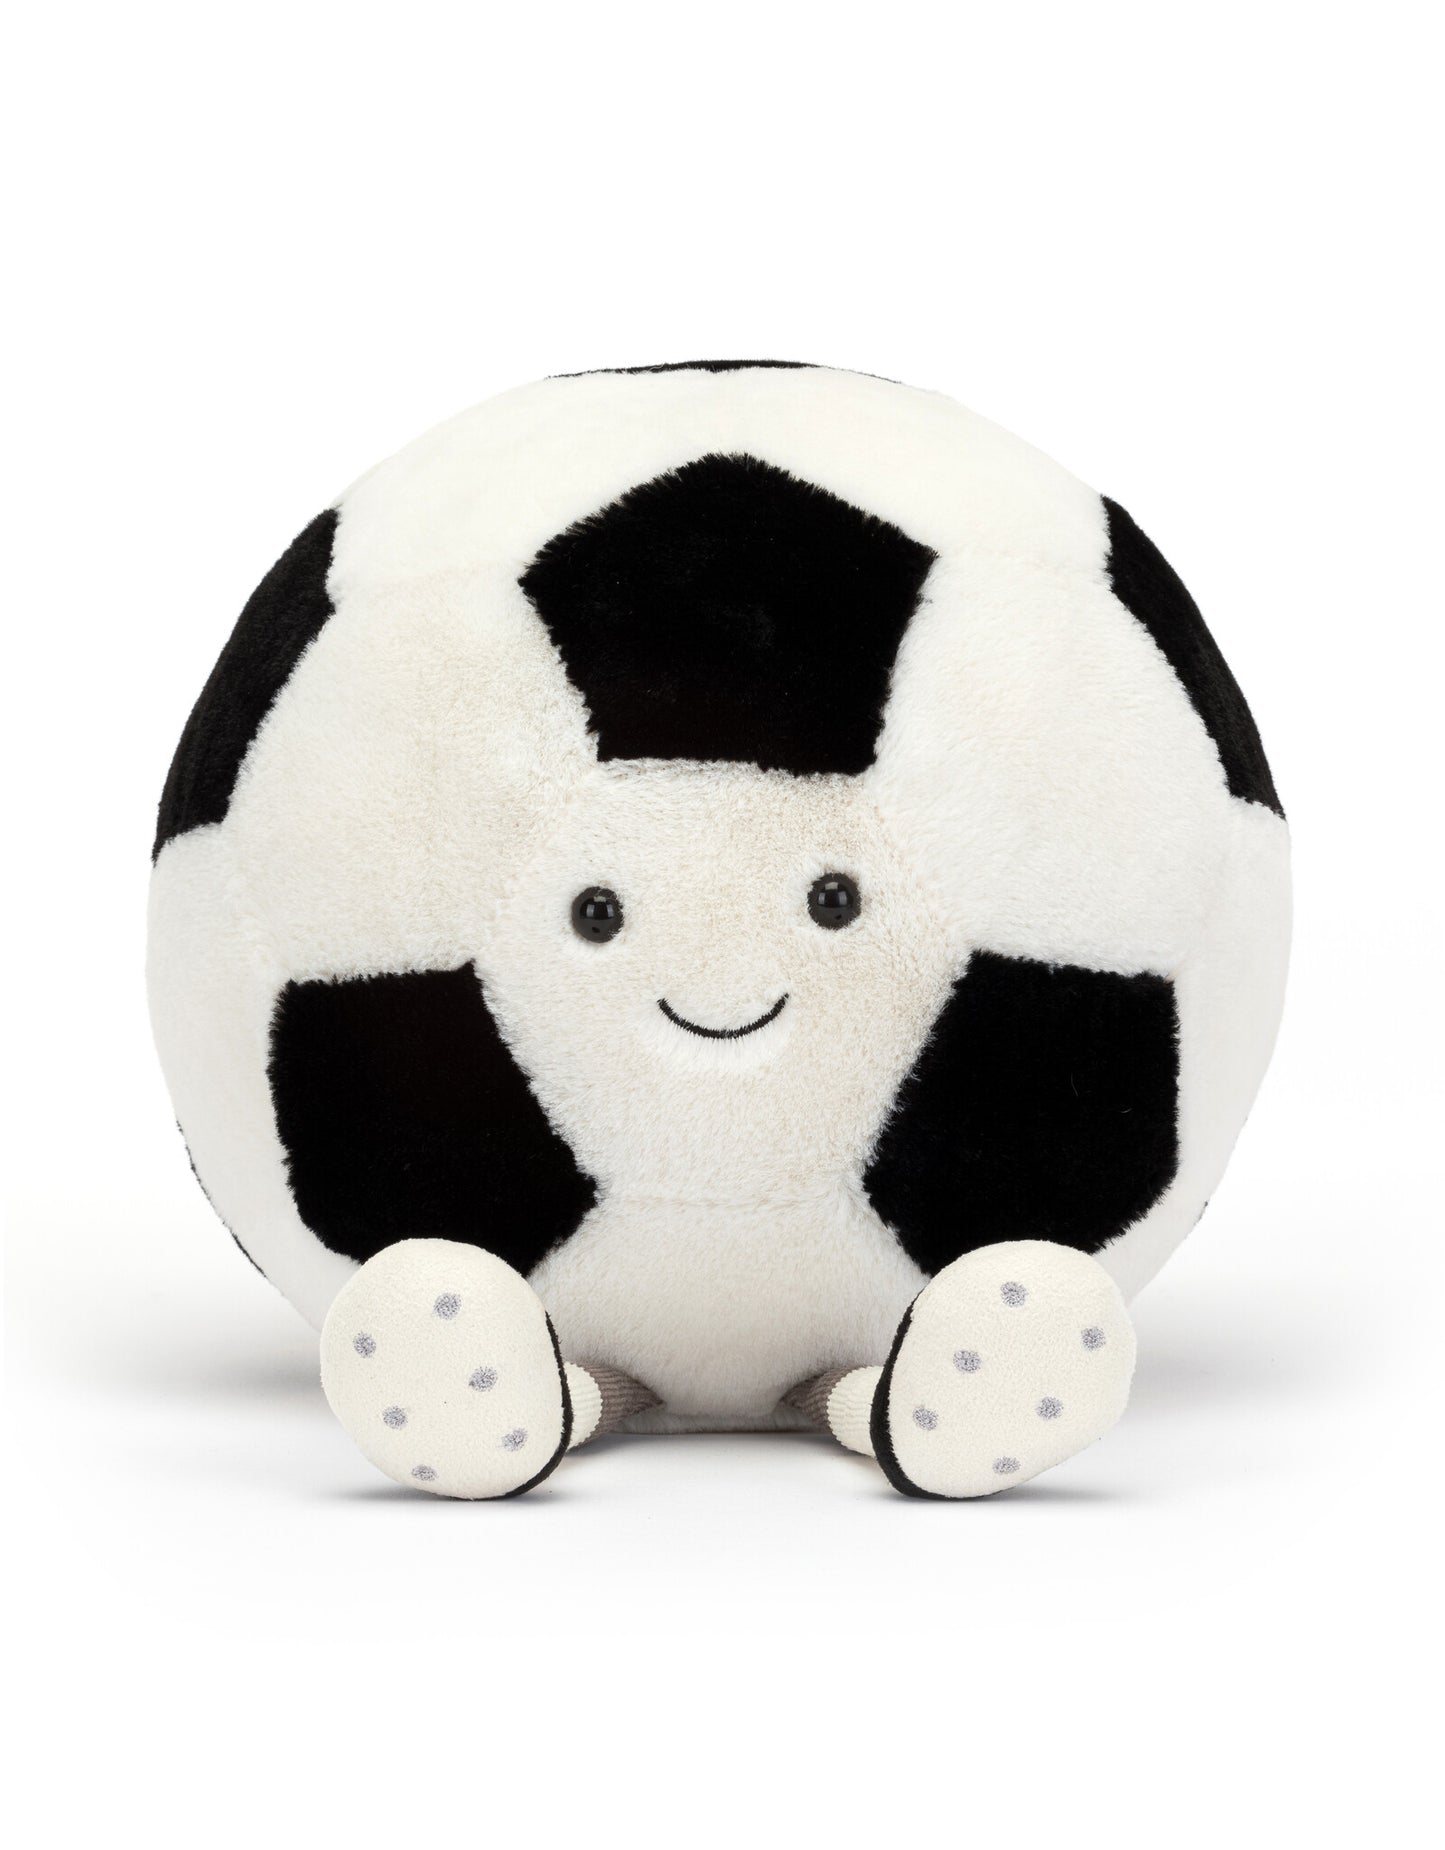 Jellycat Soccer Ball